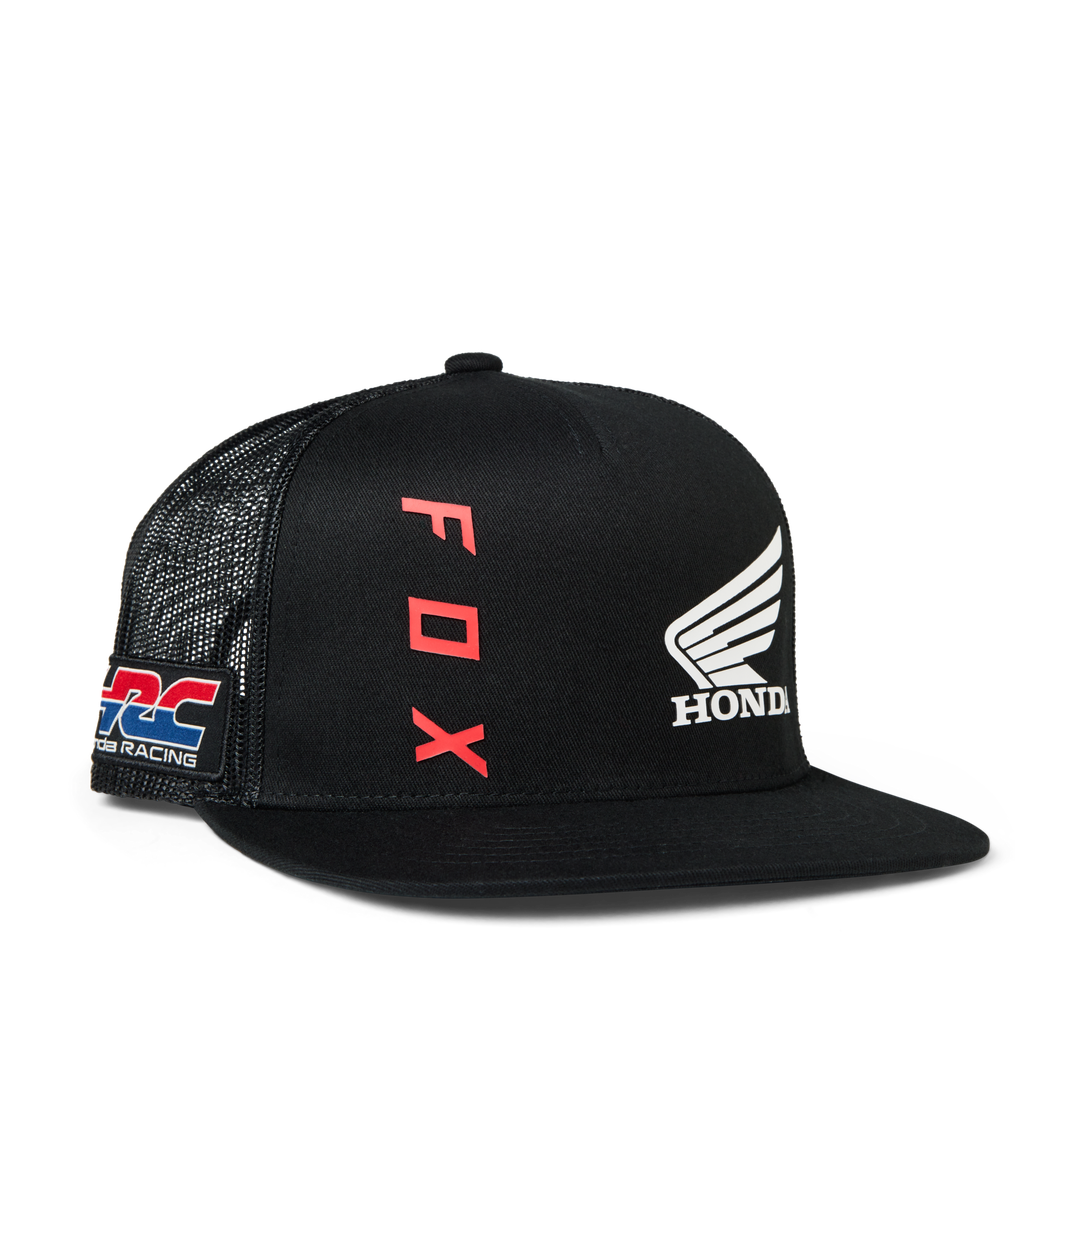 Gorra Fox Fox X Honda Snapback  [Blk]